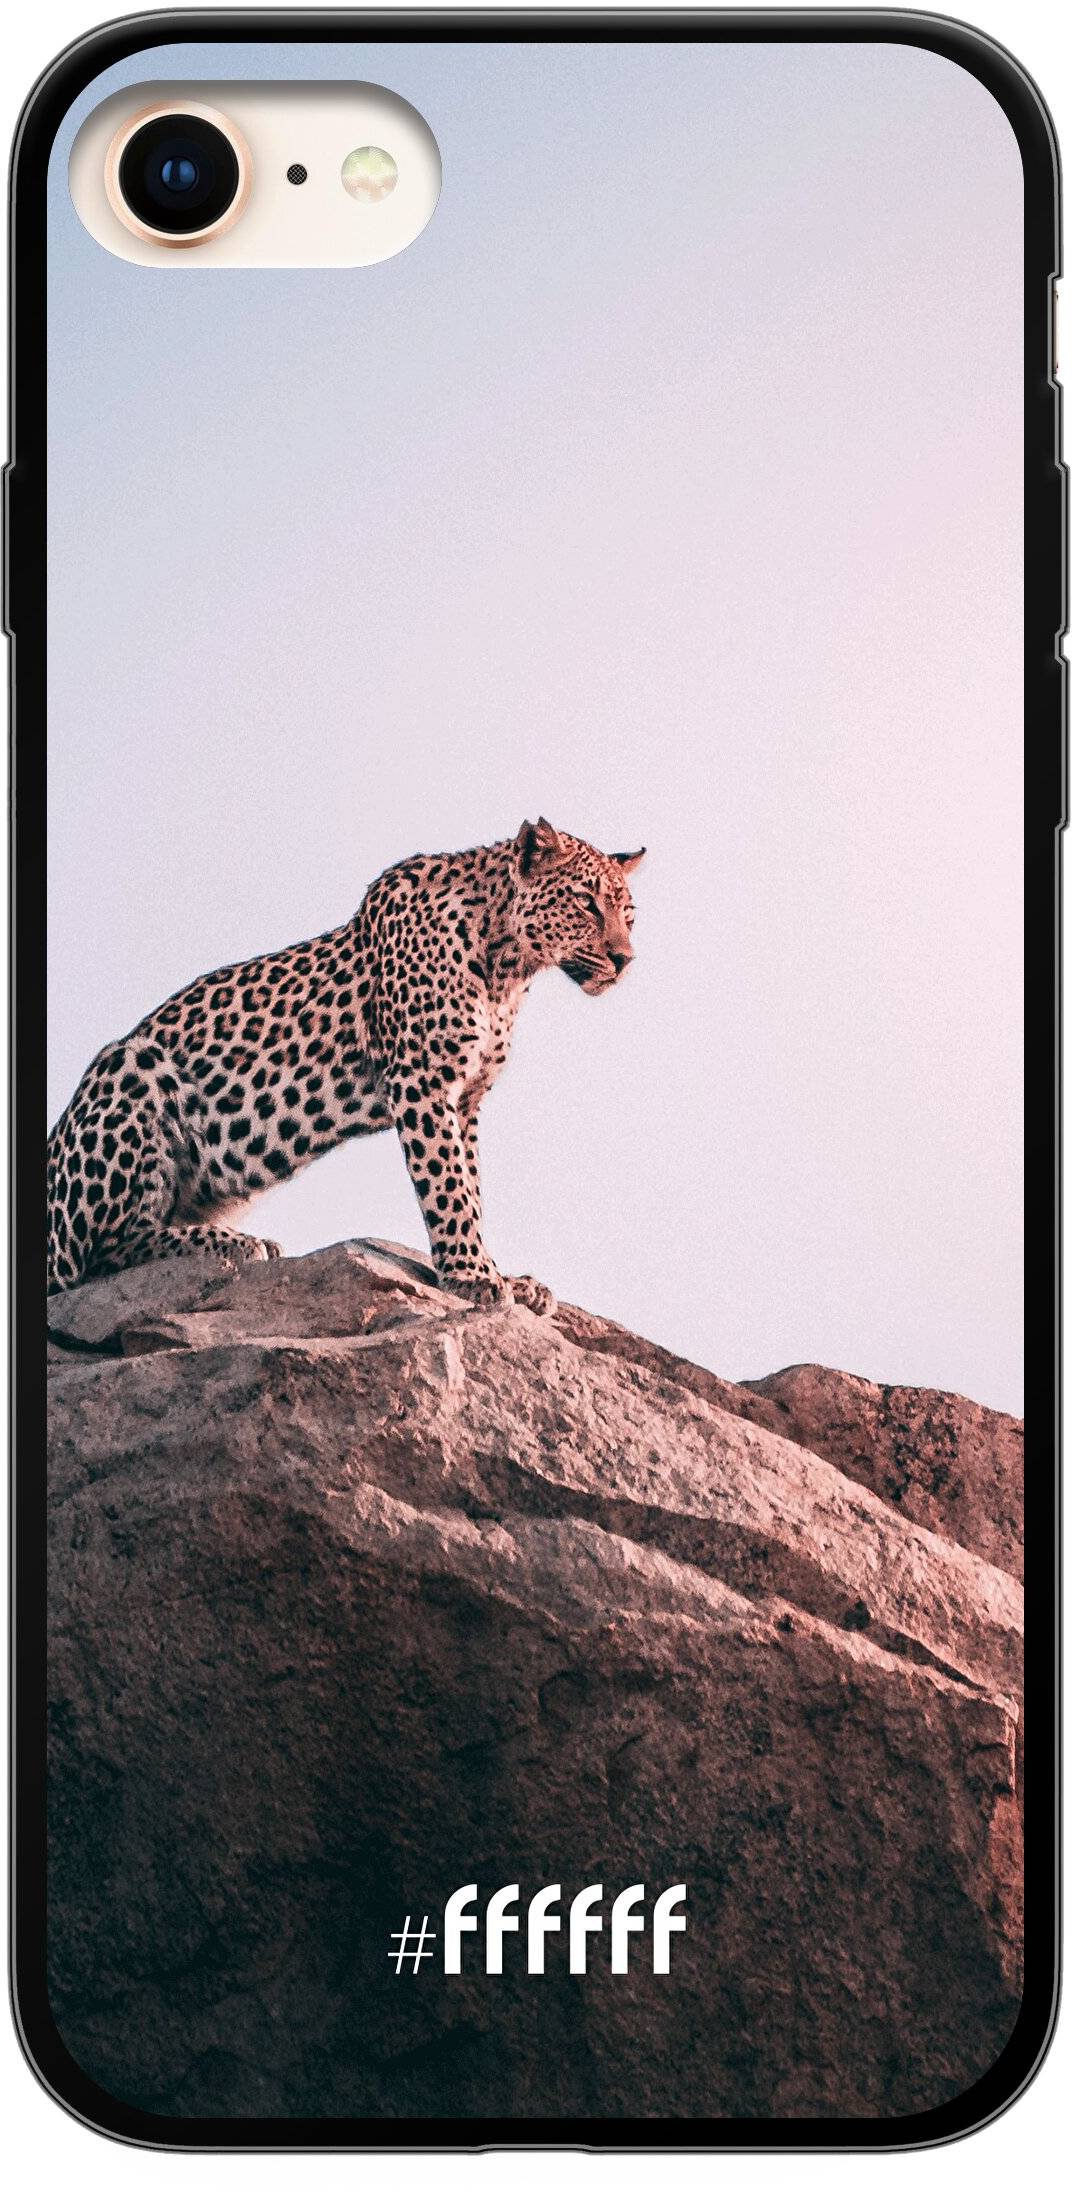 Leopard iPhone 7